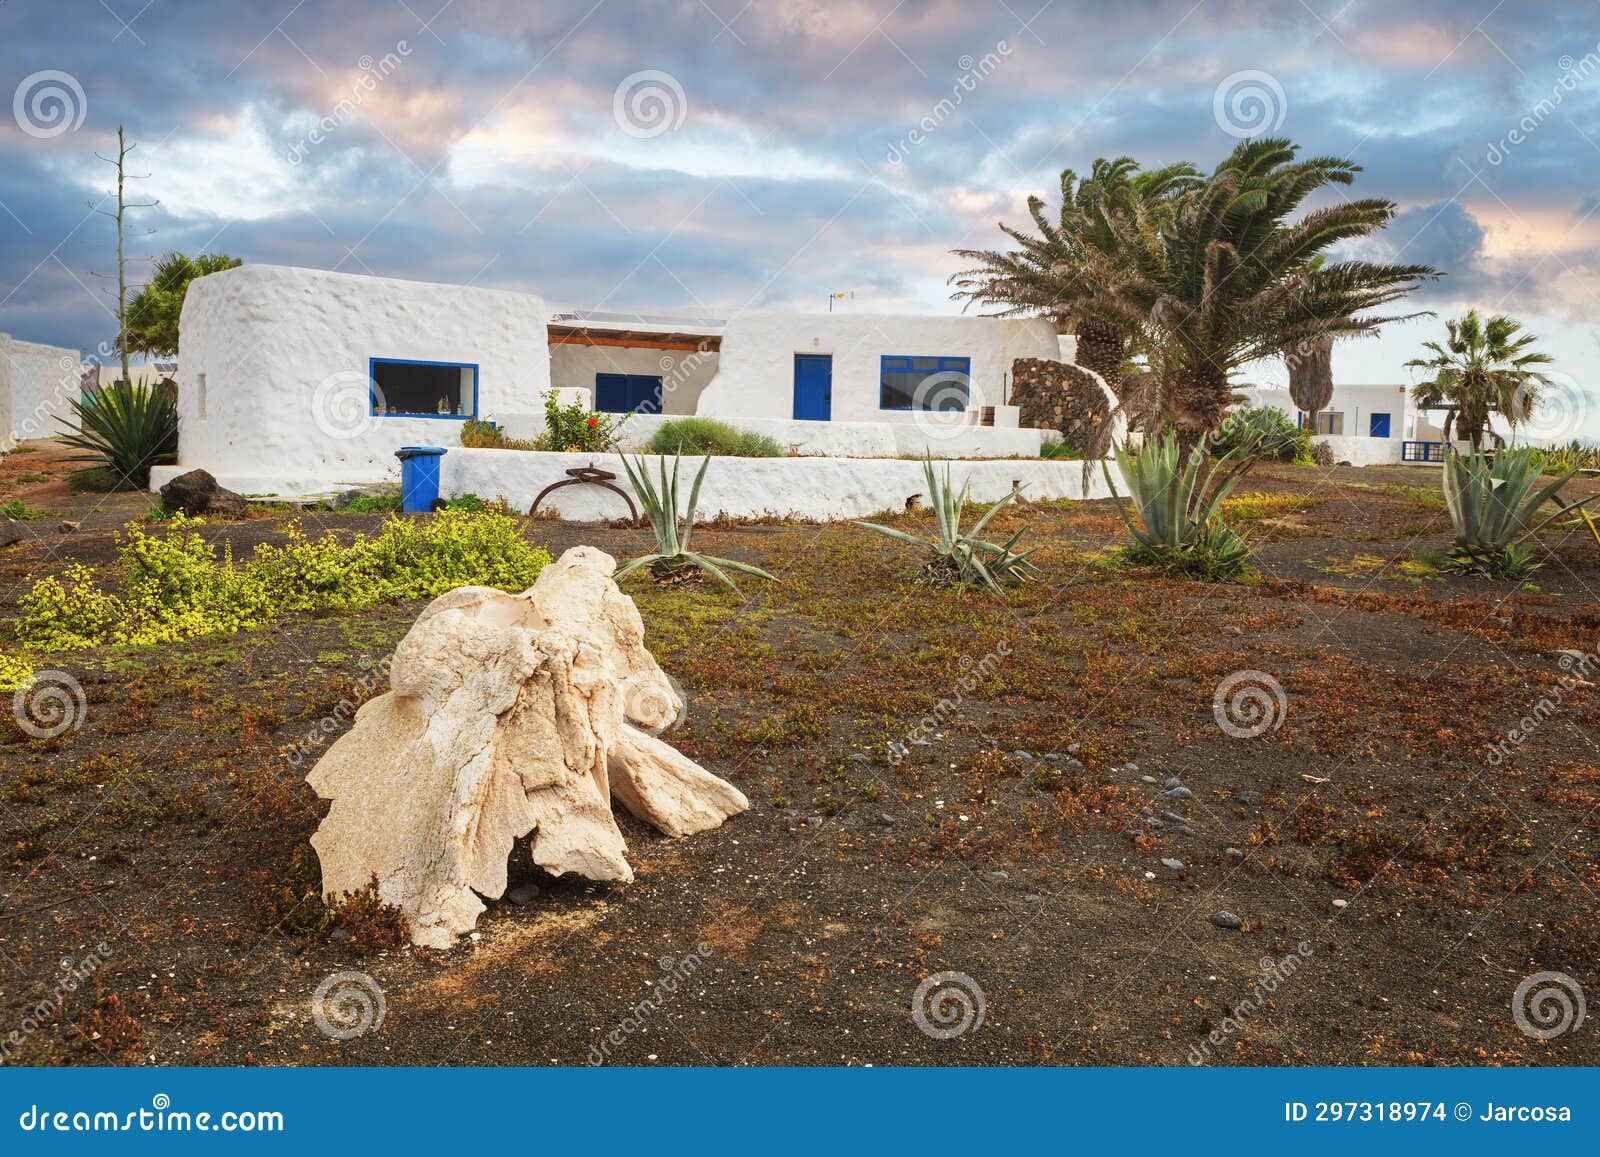 la graciosa island, house of pedro barba fishing village, lanzarote, spain